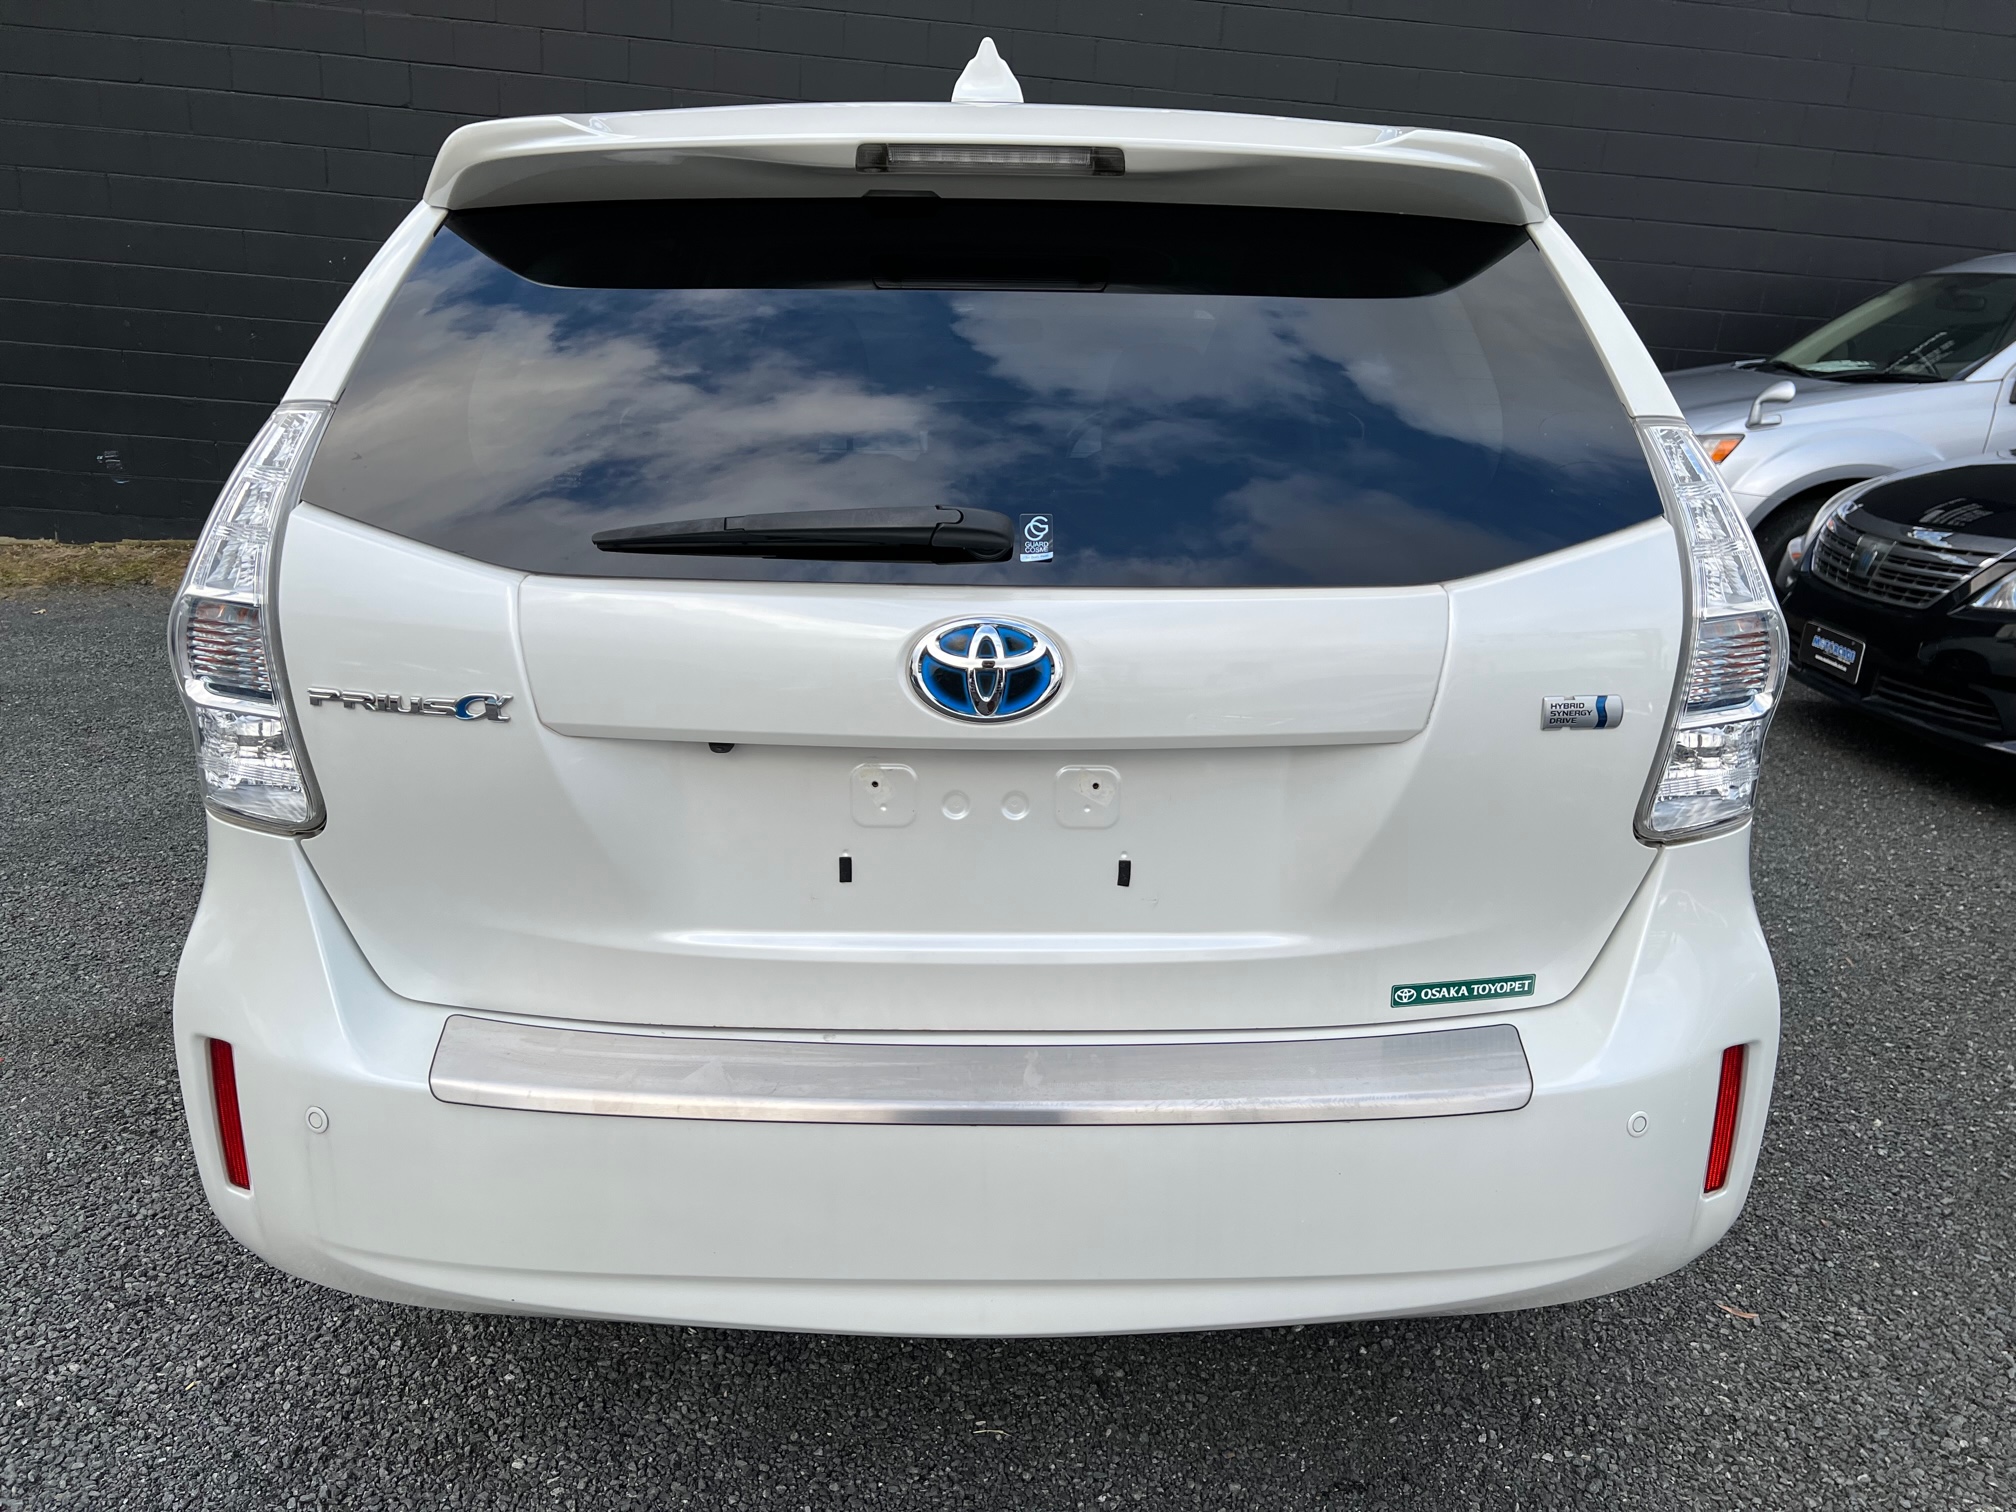 Toyota Alpha Prius 2014 Image 4